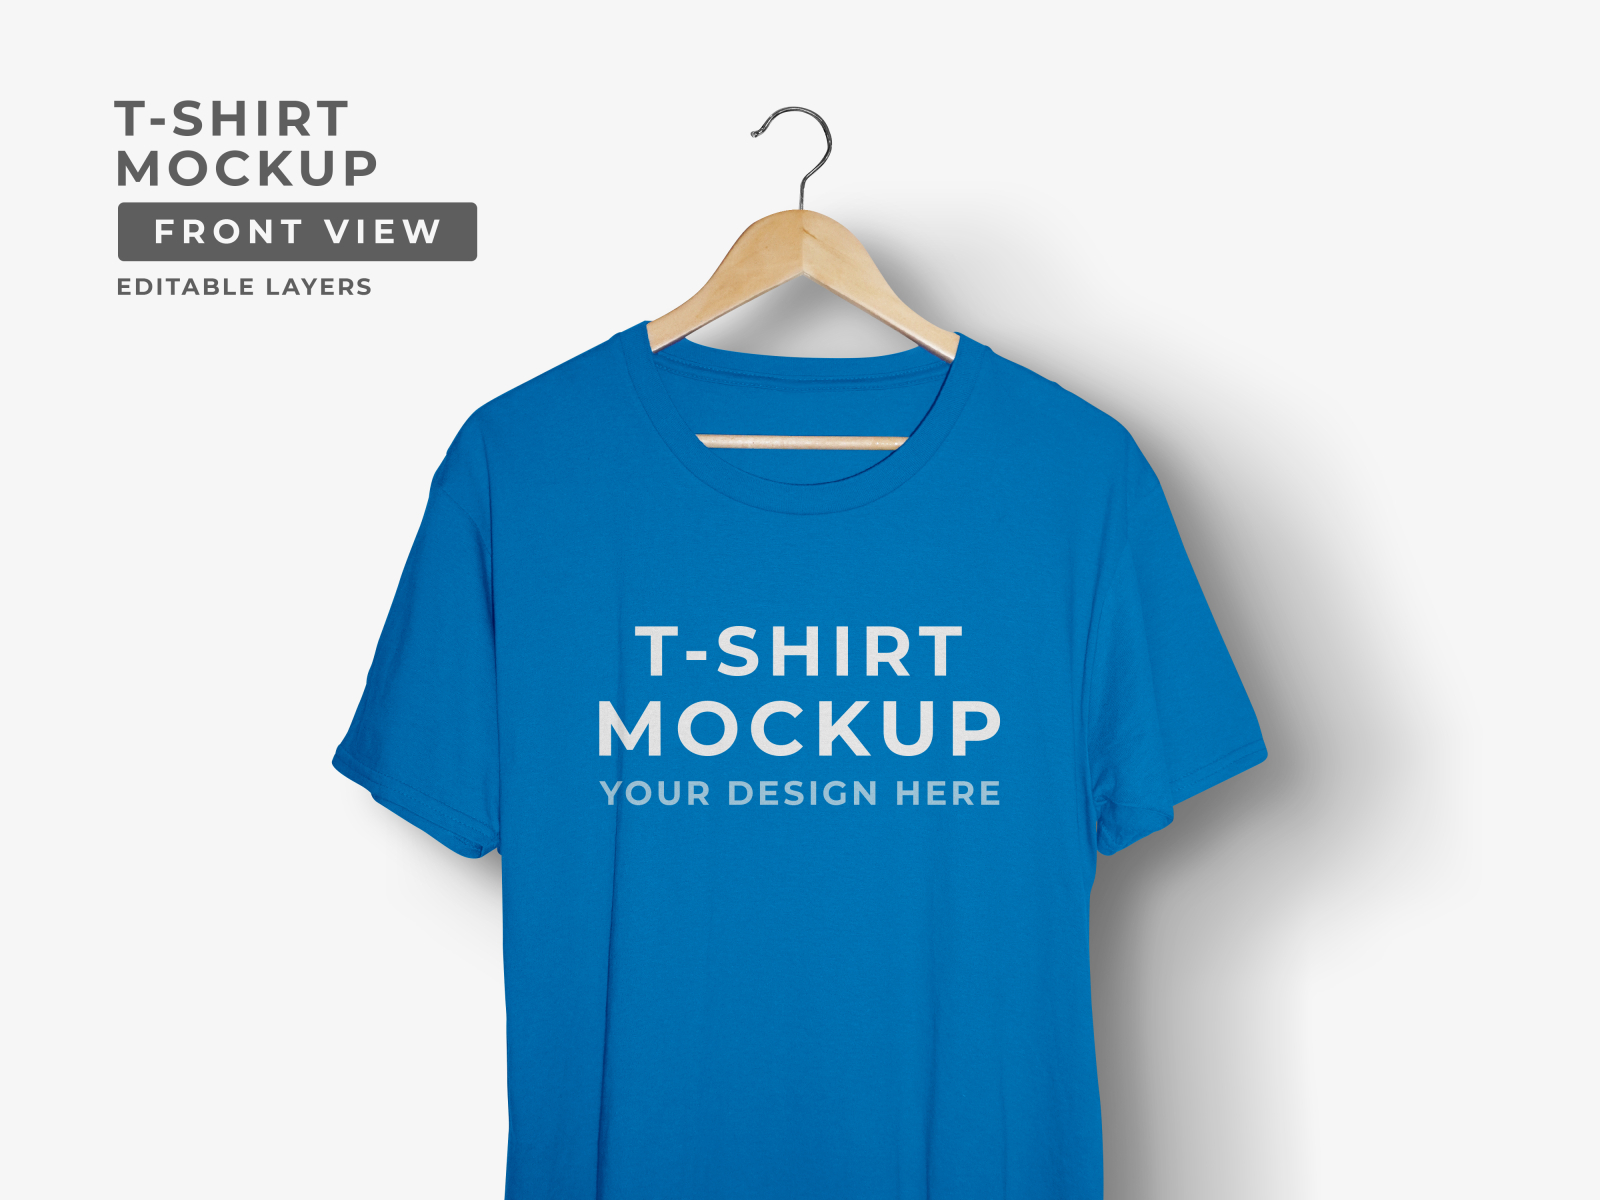 T-shirt mockup by Massadou on Dribbble